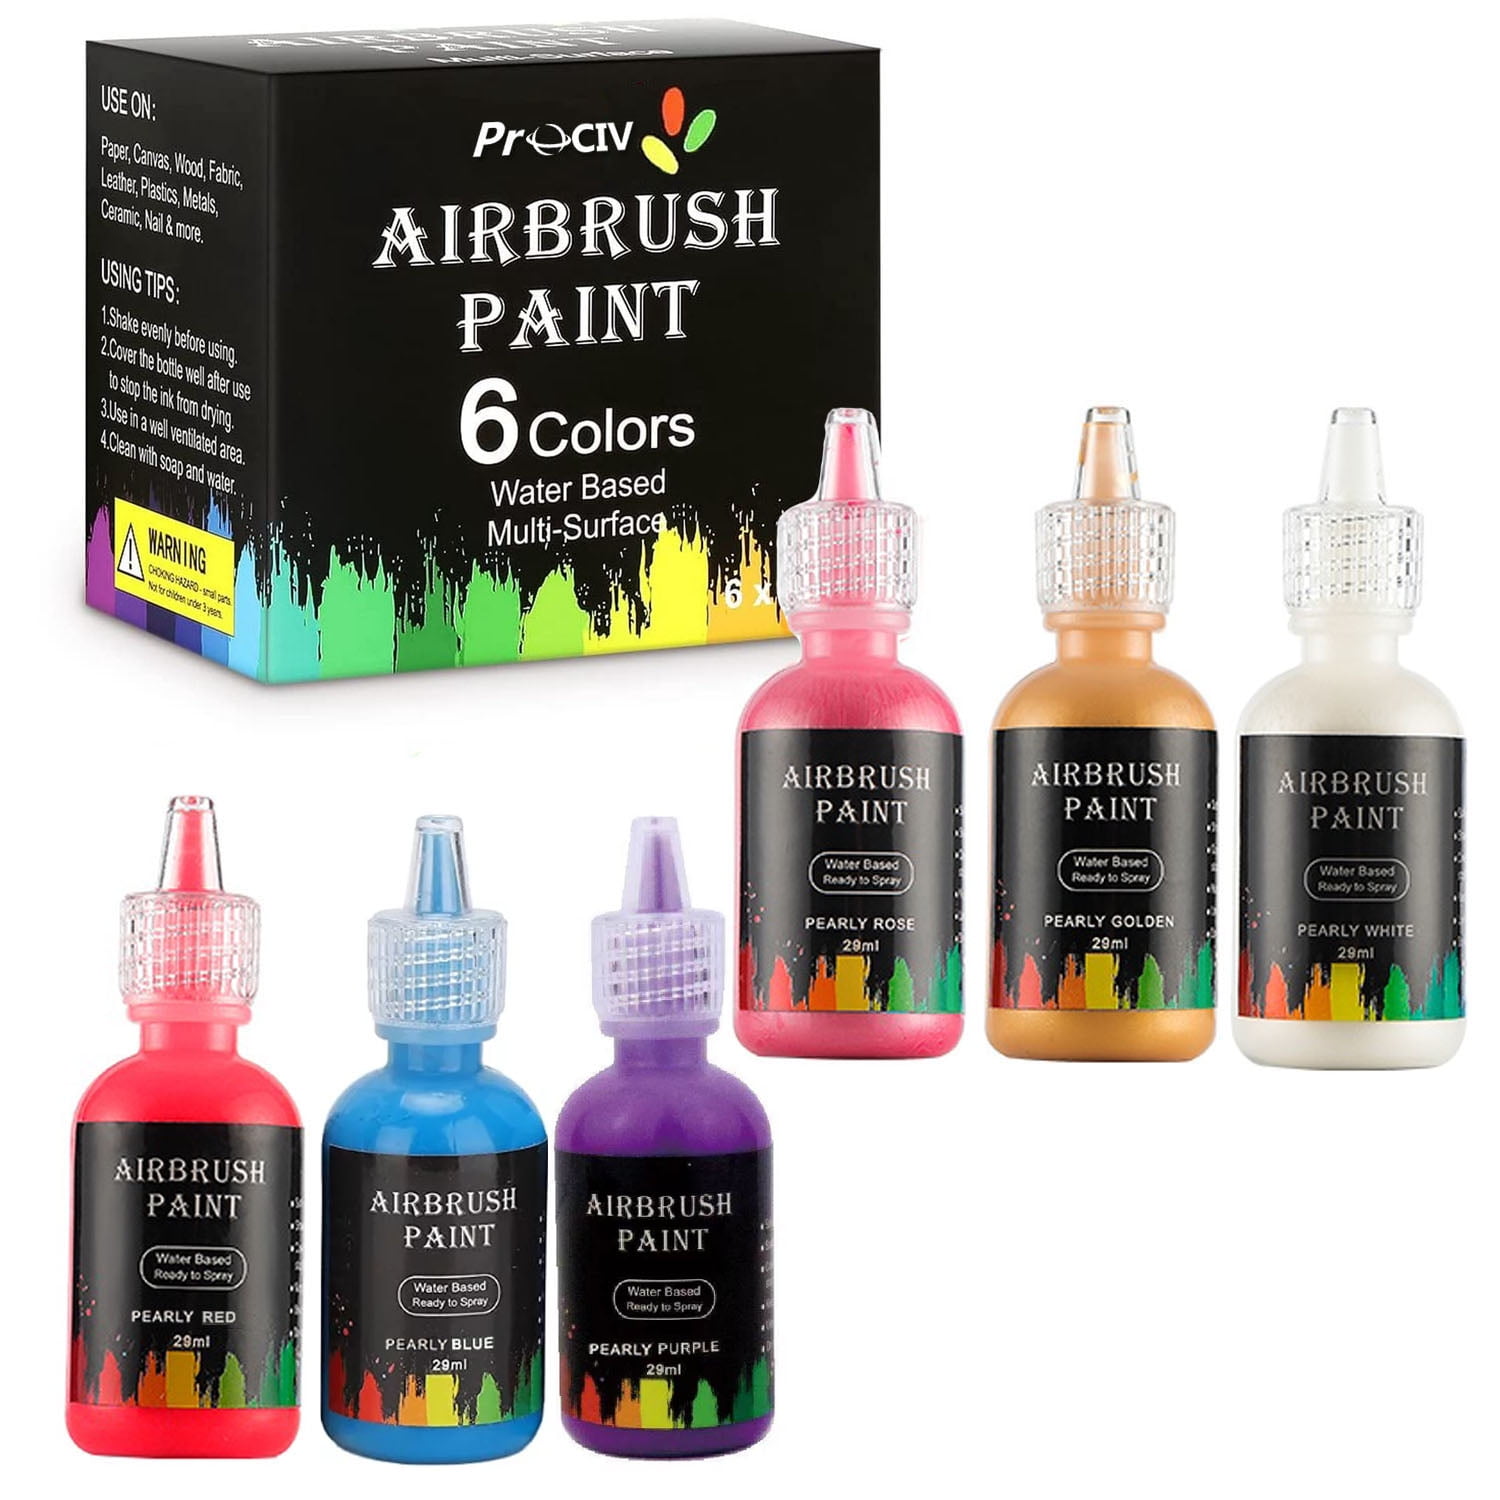 Prociv Airbrush Paint, 6 Color Acrylic Airbrush Paint Set, Water